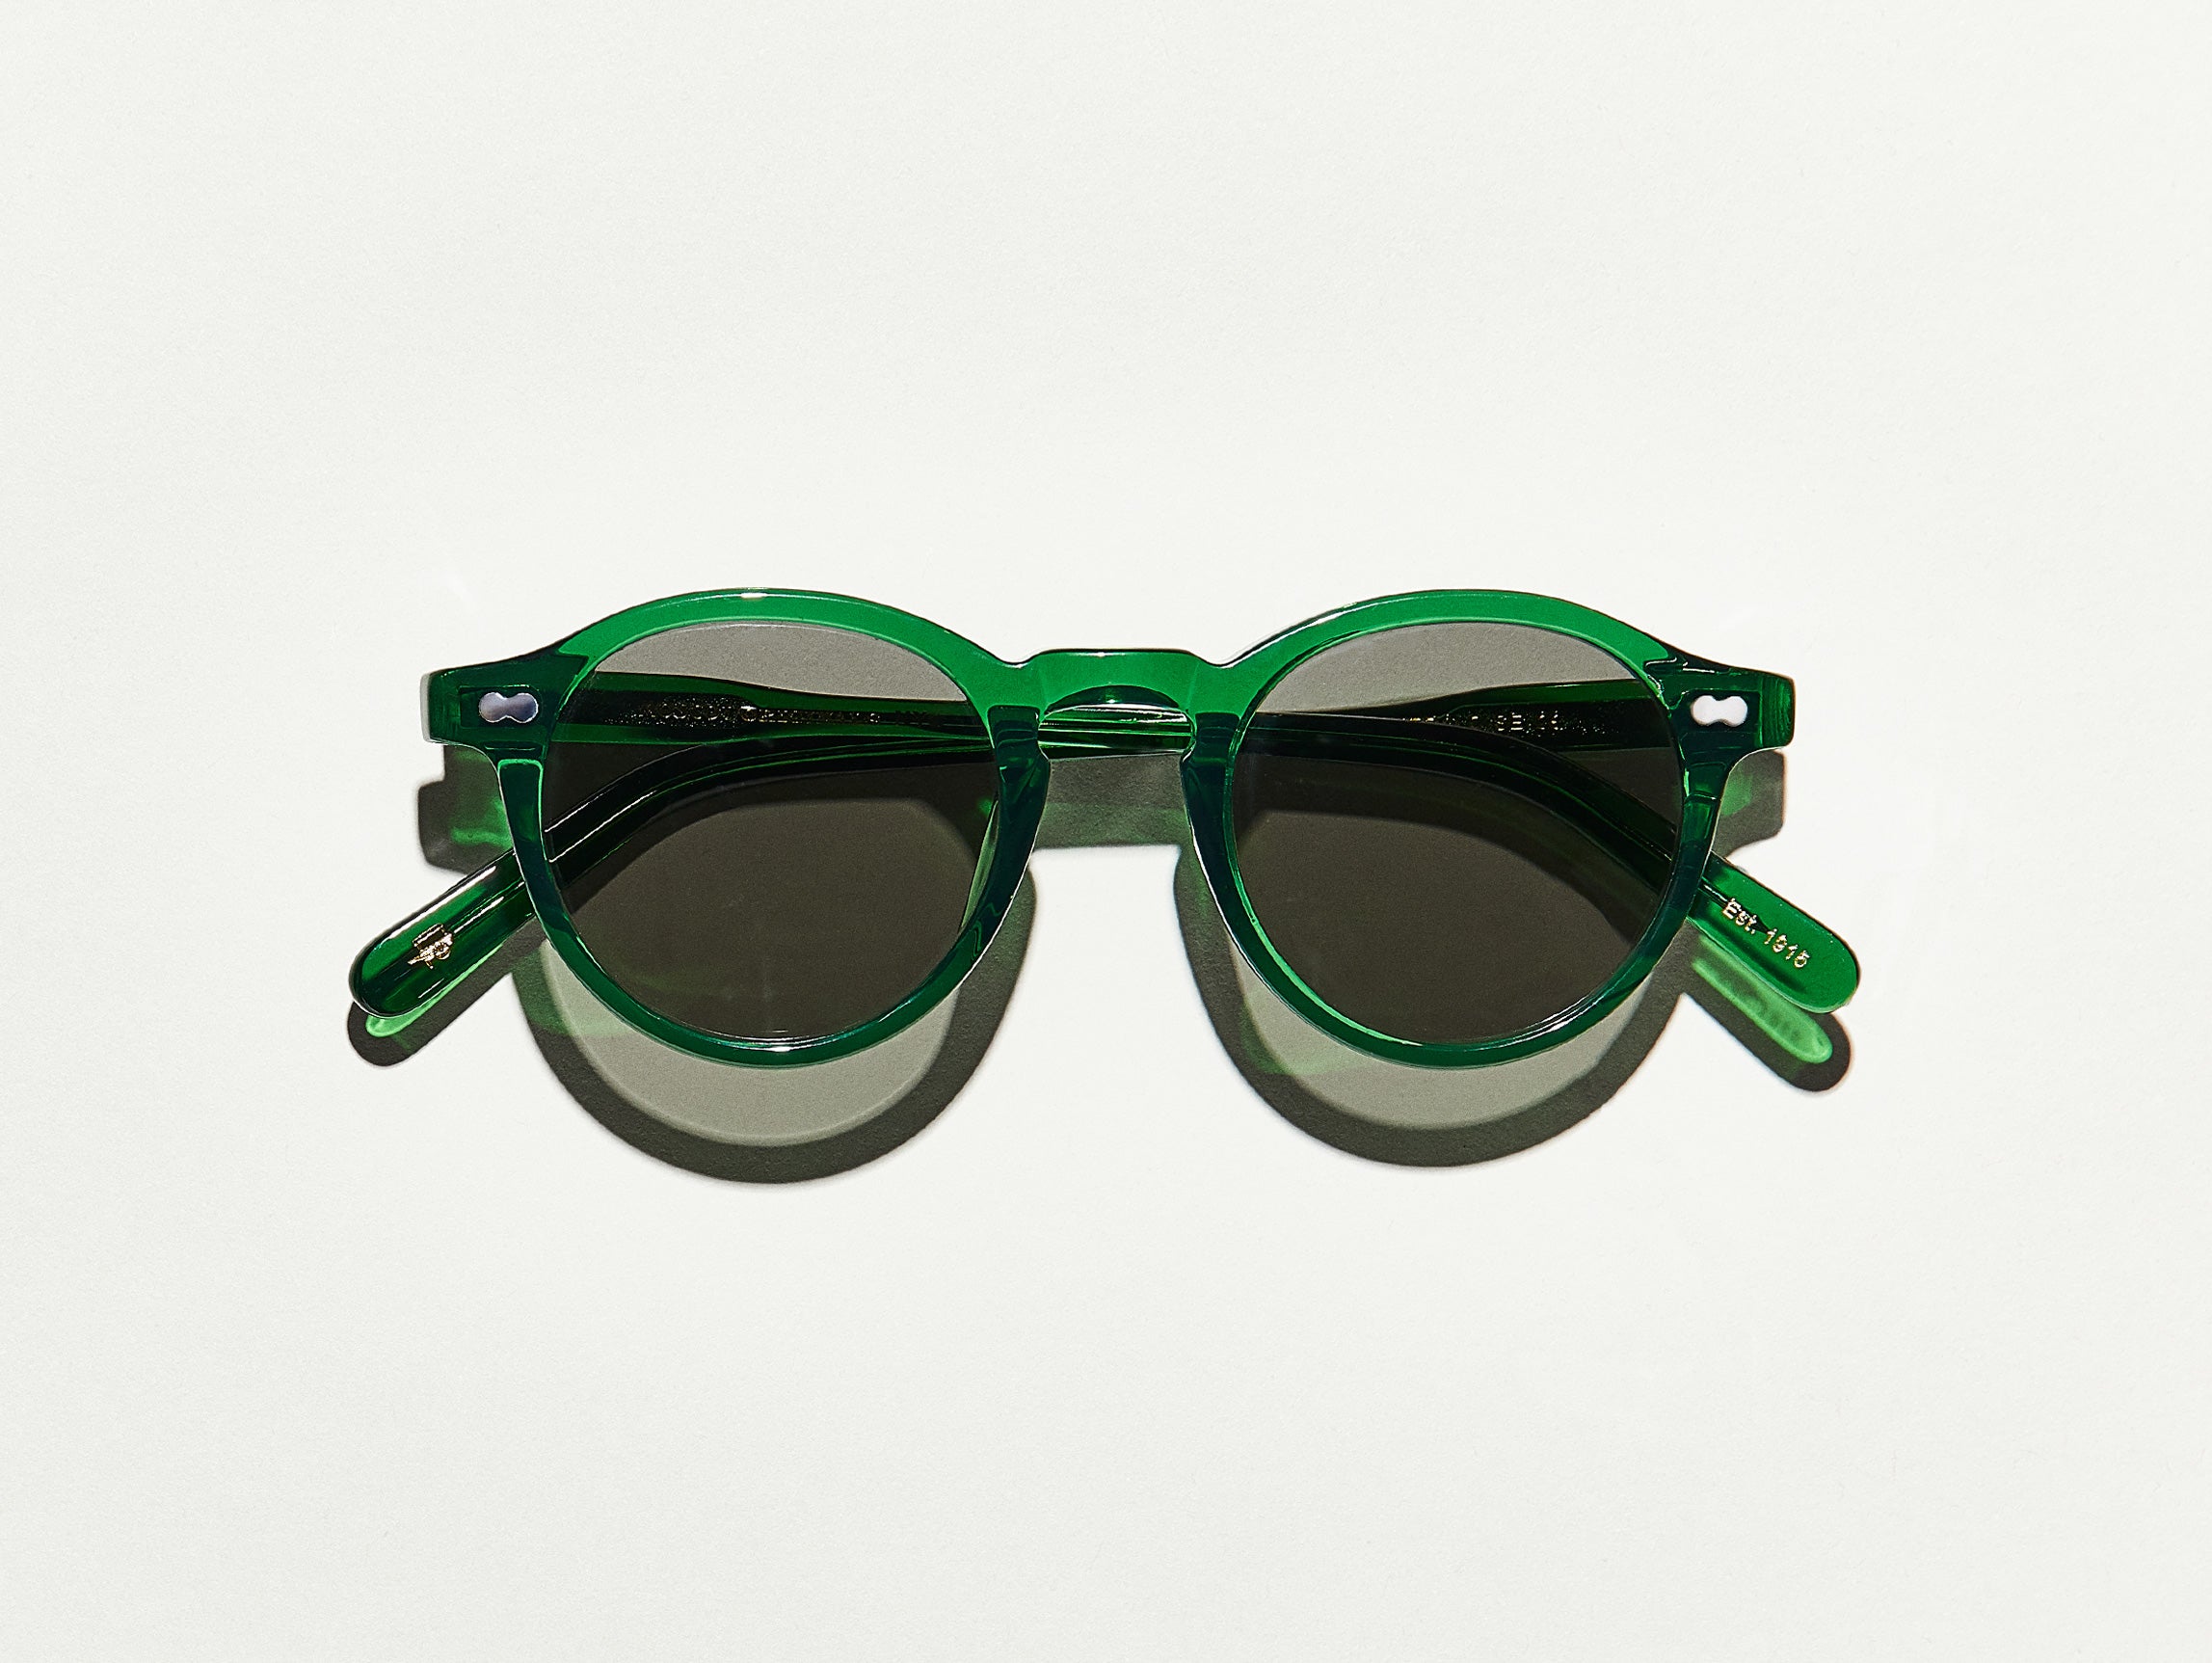 Emerald Coast Square Sunglasses - Polarized Green Lens & Black Frame